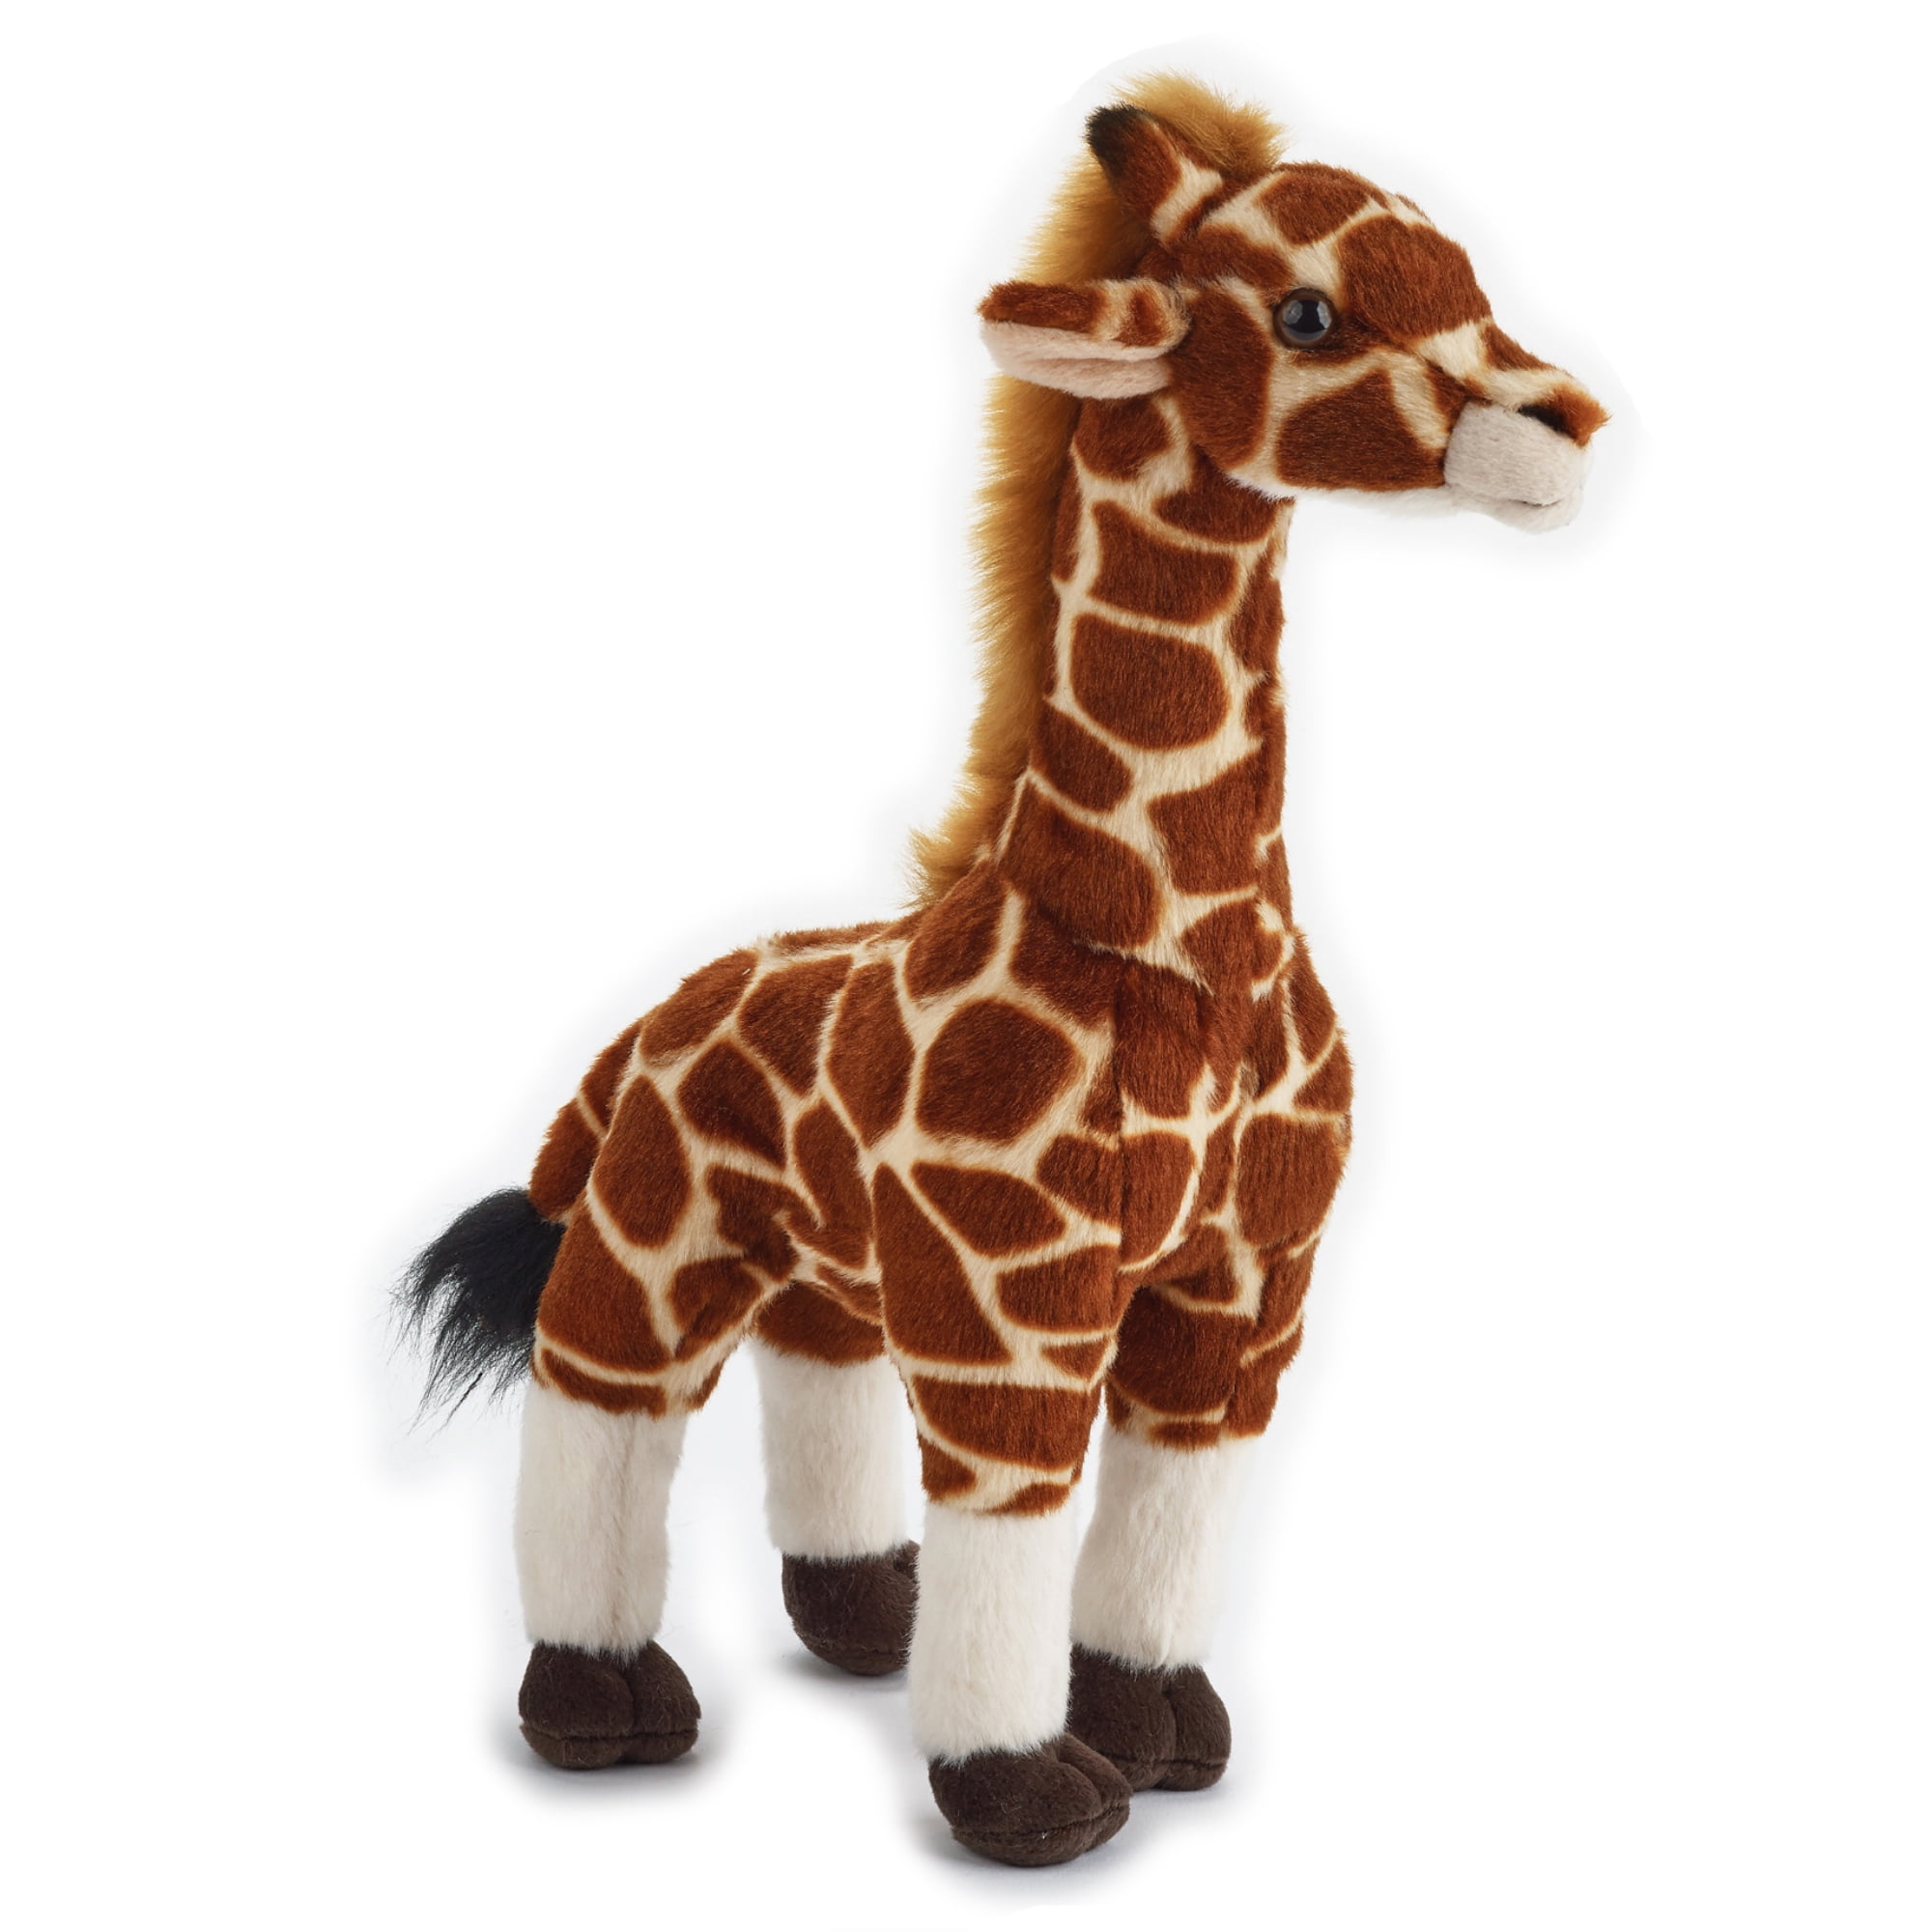 New Giraffe Nat Geo Lelly Plush Animal Stuffed Toy Gift National Geographic Toys 